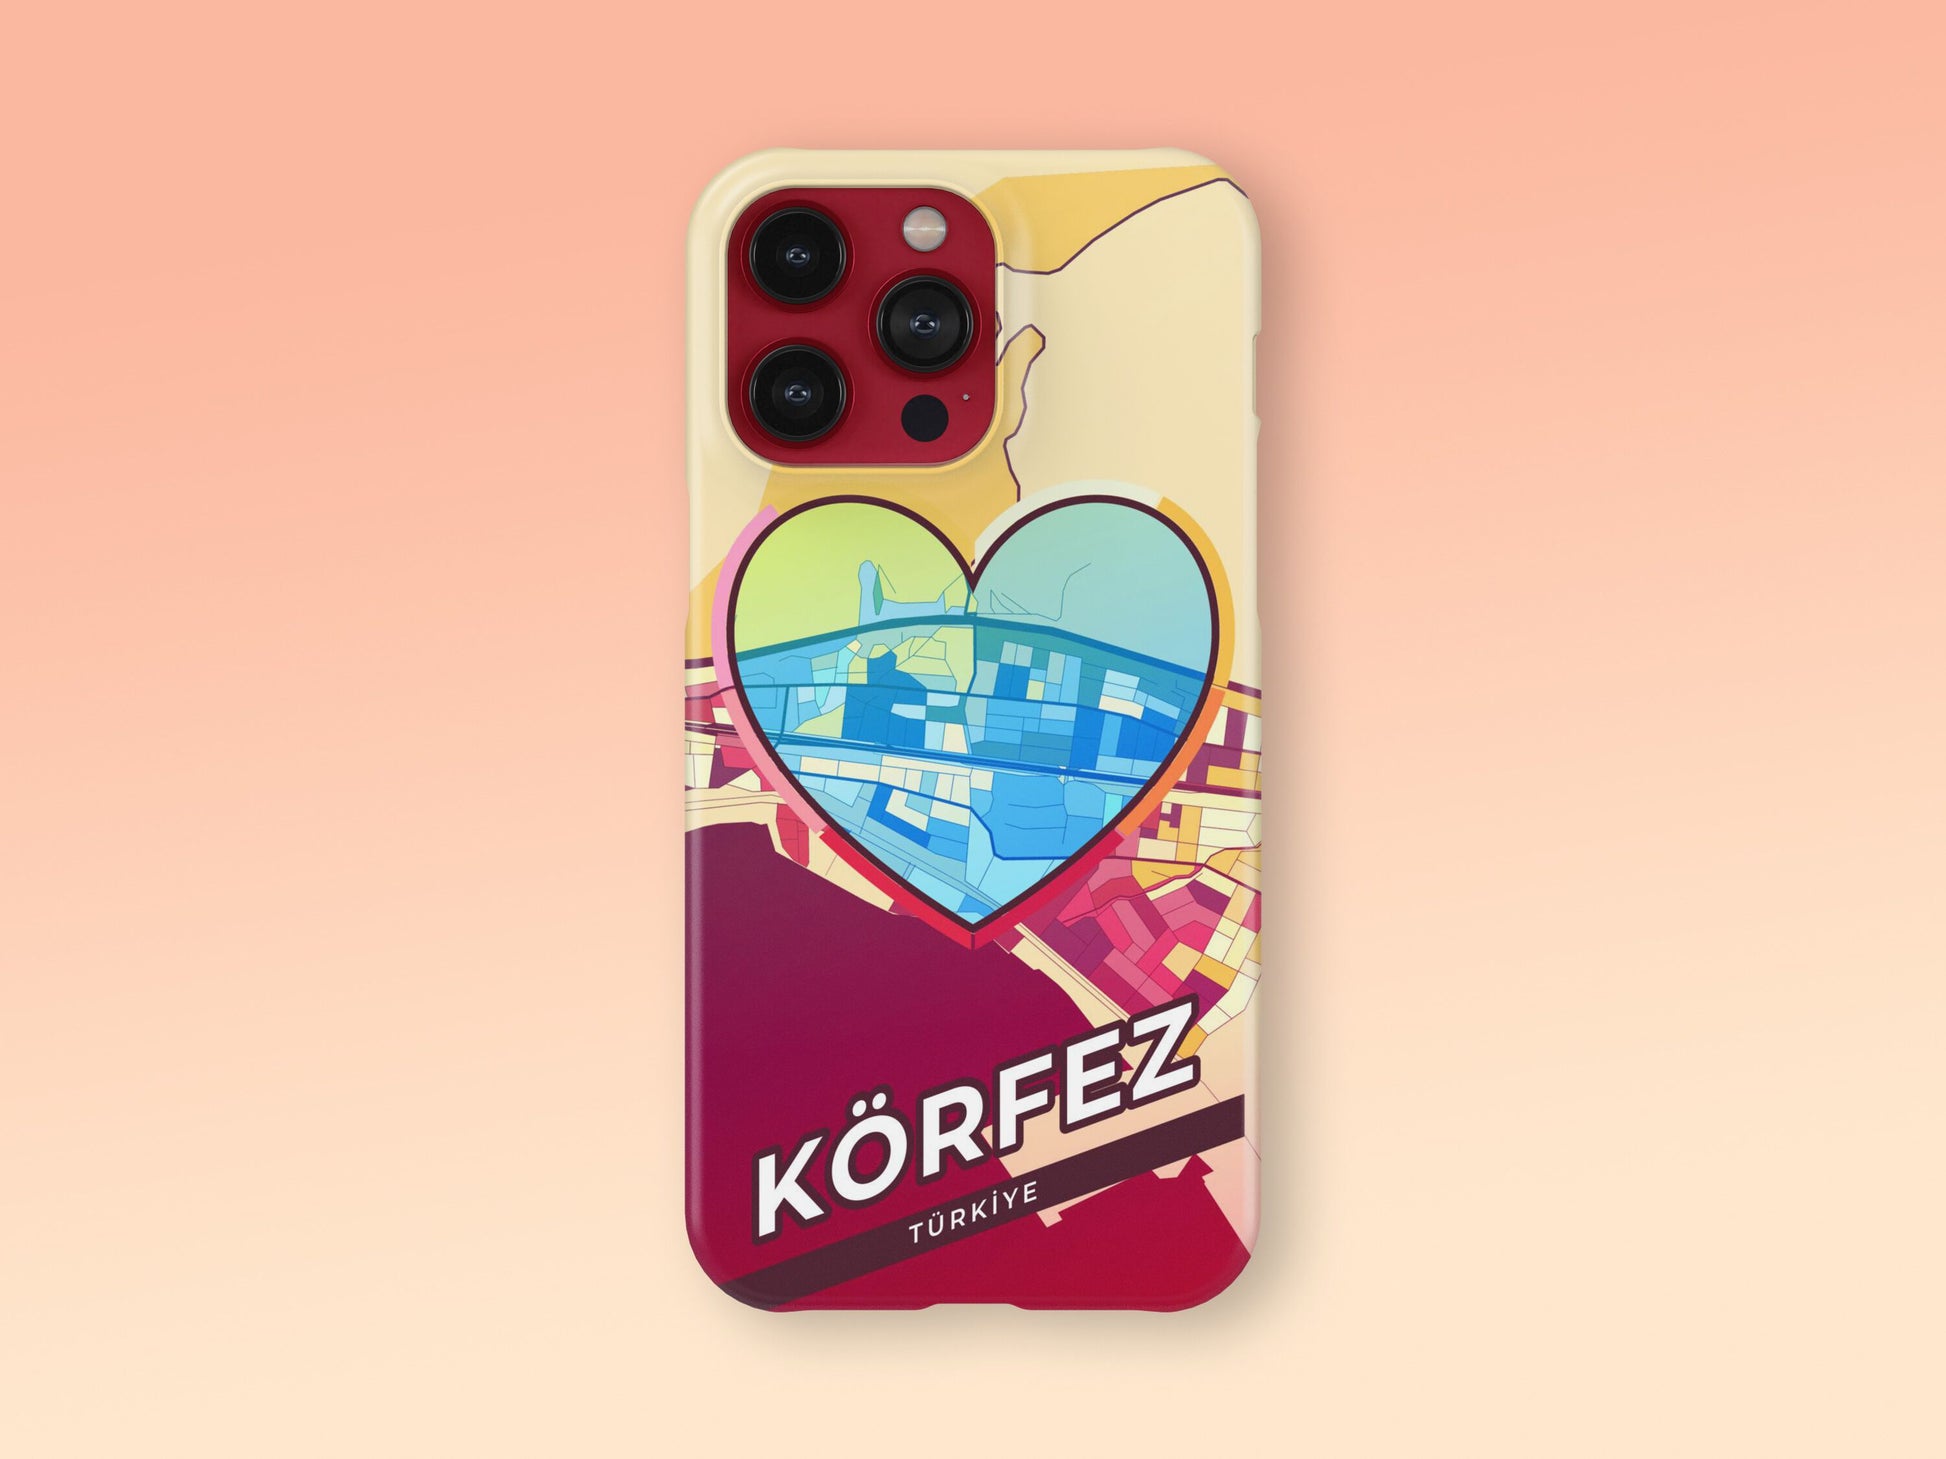 Körfez Turkey slim phone case with colorful icon. Birthday, wedding or housewarming gift. Couple match cases. 2